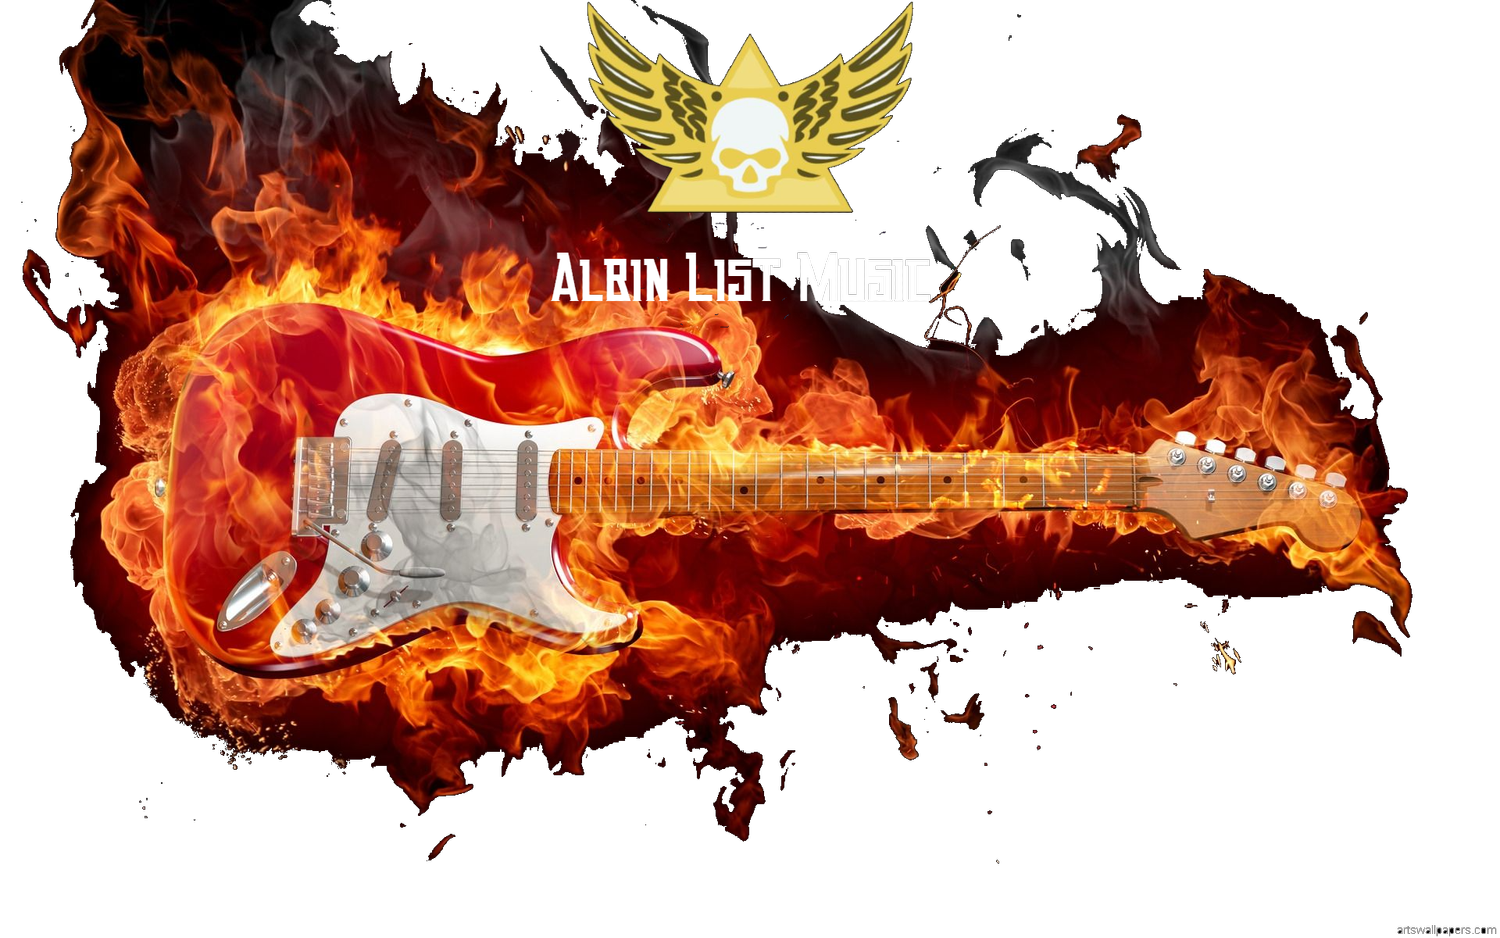 Albin List Music